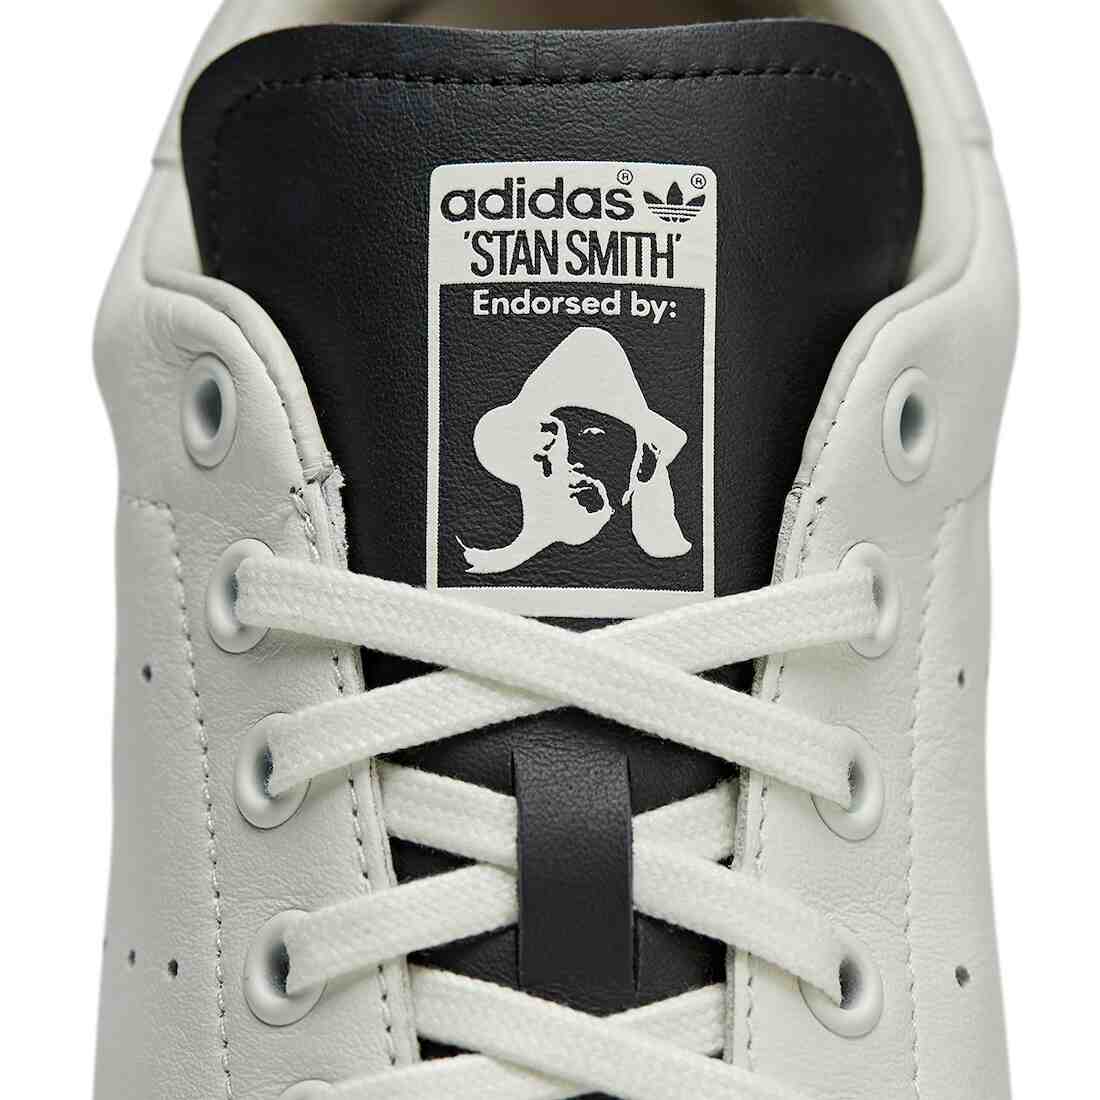 运动鞋, Stan Smith, Black, adidas Y-3, Adidas Stan Smith, Adidas - Yohji Yamamoto x adidas Stan Smith系列将于10月3日发布。